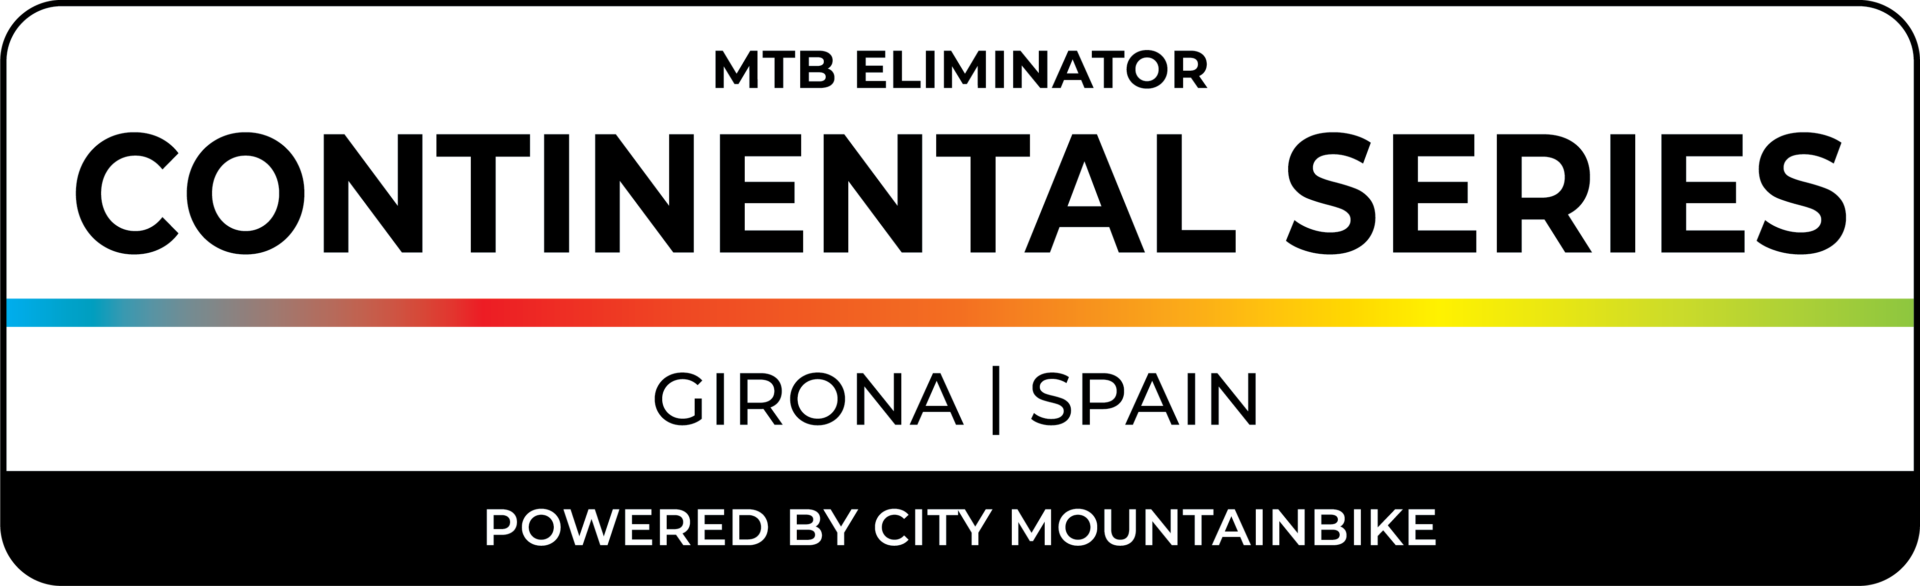 Continental Series Girona ESP